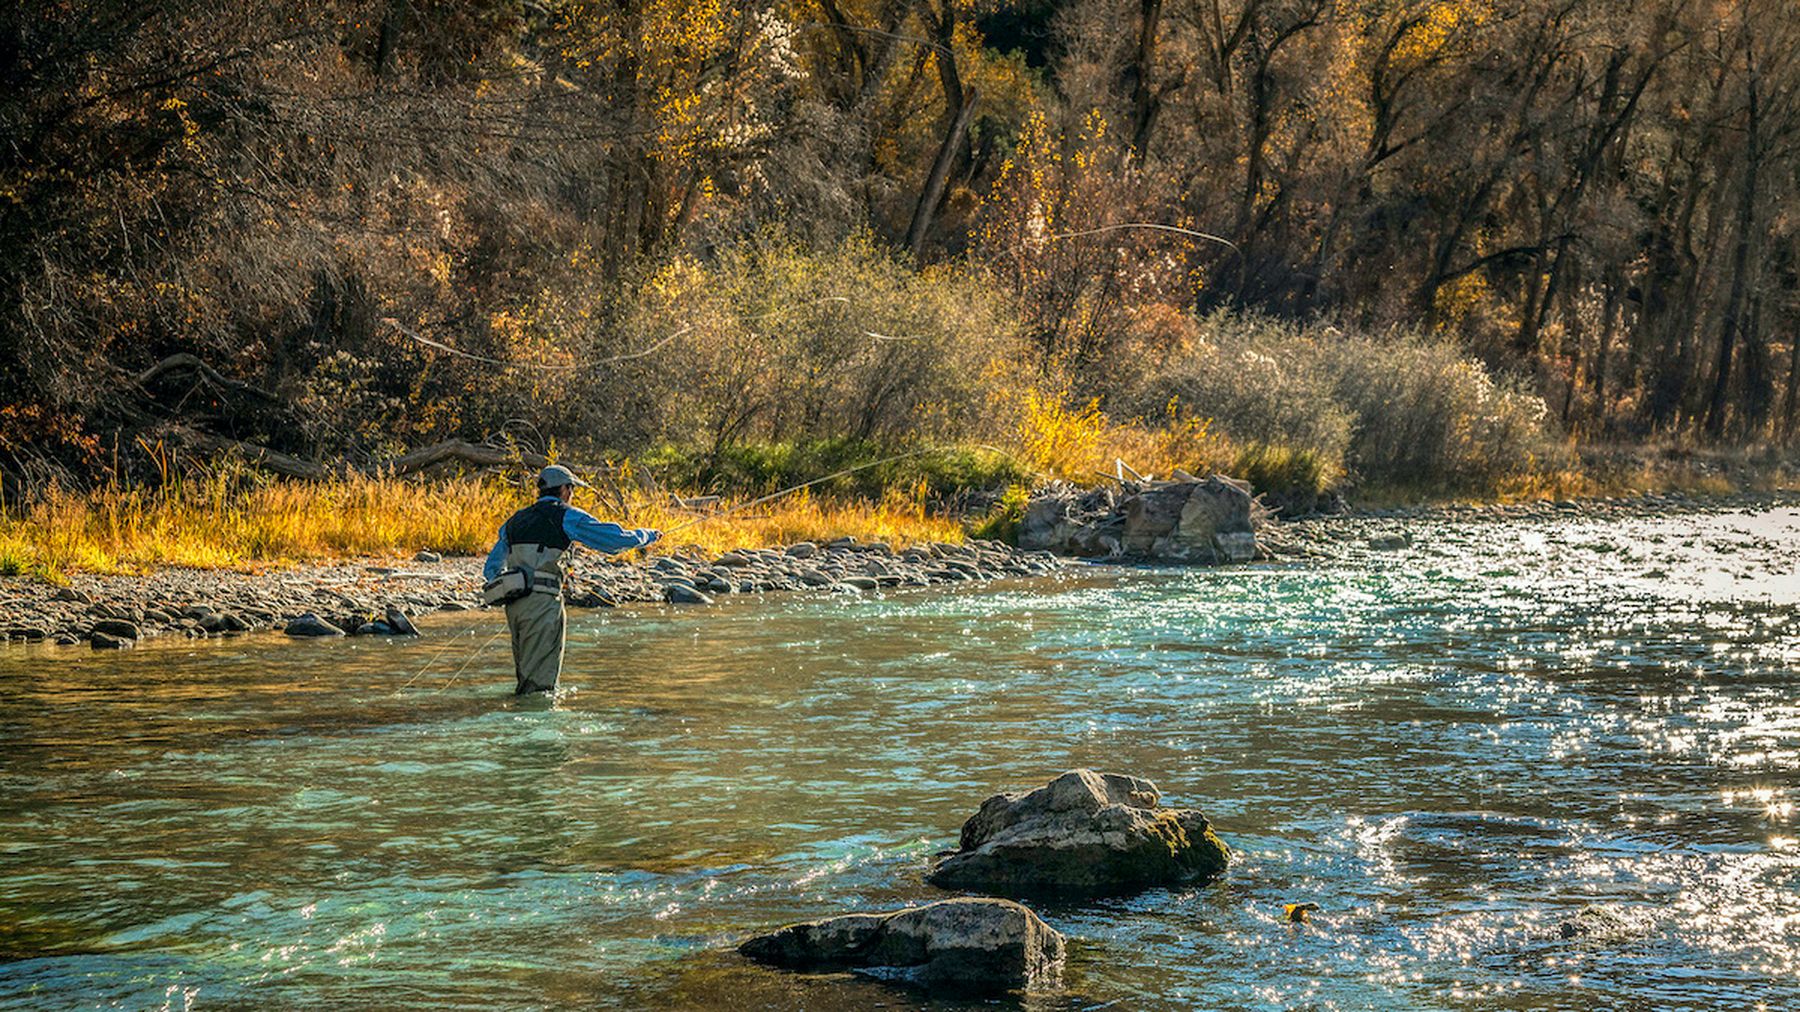 Image of a man fishing